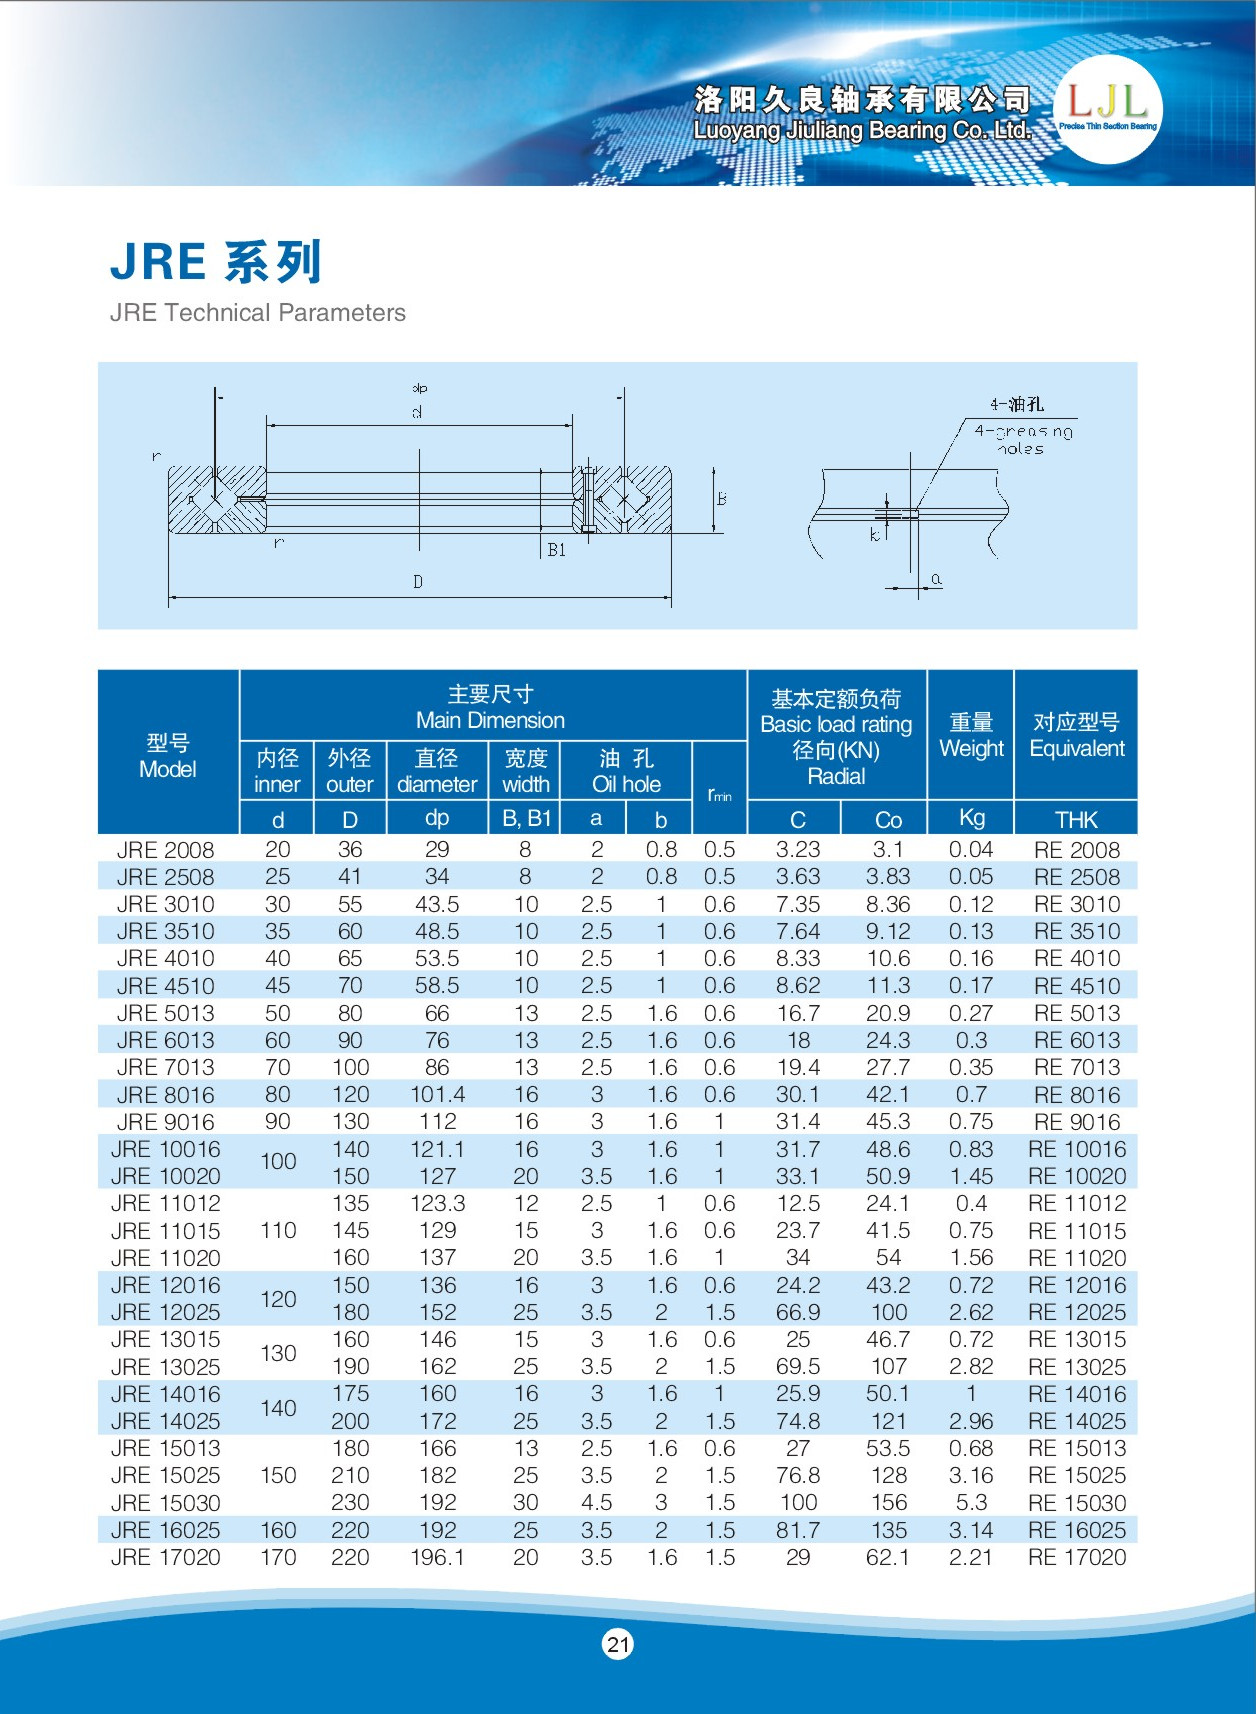 JRE2008 | JRE2508 | JRE3010 | JRE3510 | JRE4010 | JRE4510 | JRE5013 | JRE6013 | JRE7013 | JRE8016 | JRE9016 | JRE10016 | JRE10020 | JRE11012 | JRE11015 | JRE11020 | JRE12016 | JRE12025 | JRE13015 | JRE13025 | JRE14016 | JRE14025 | JRE15013 | JRE15025 | JRE15030 | JRE16025 | JRE17020 | 